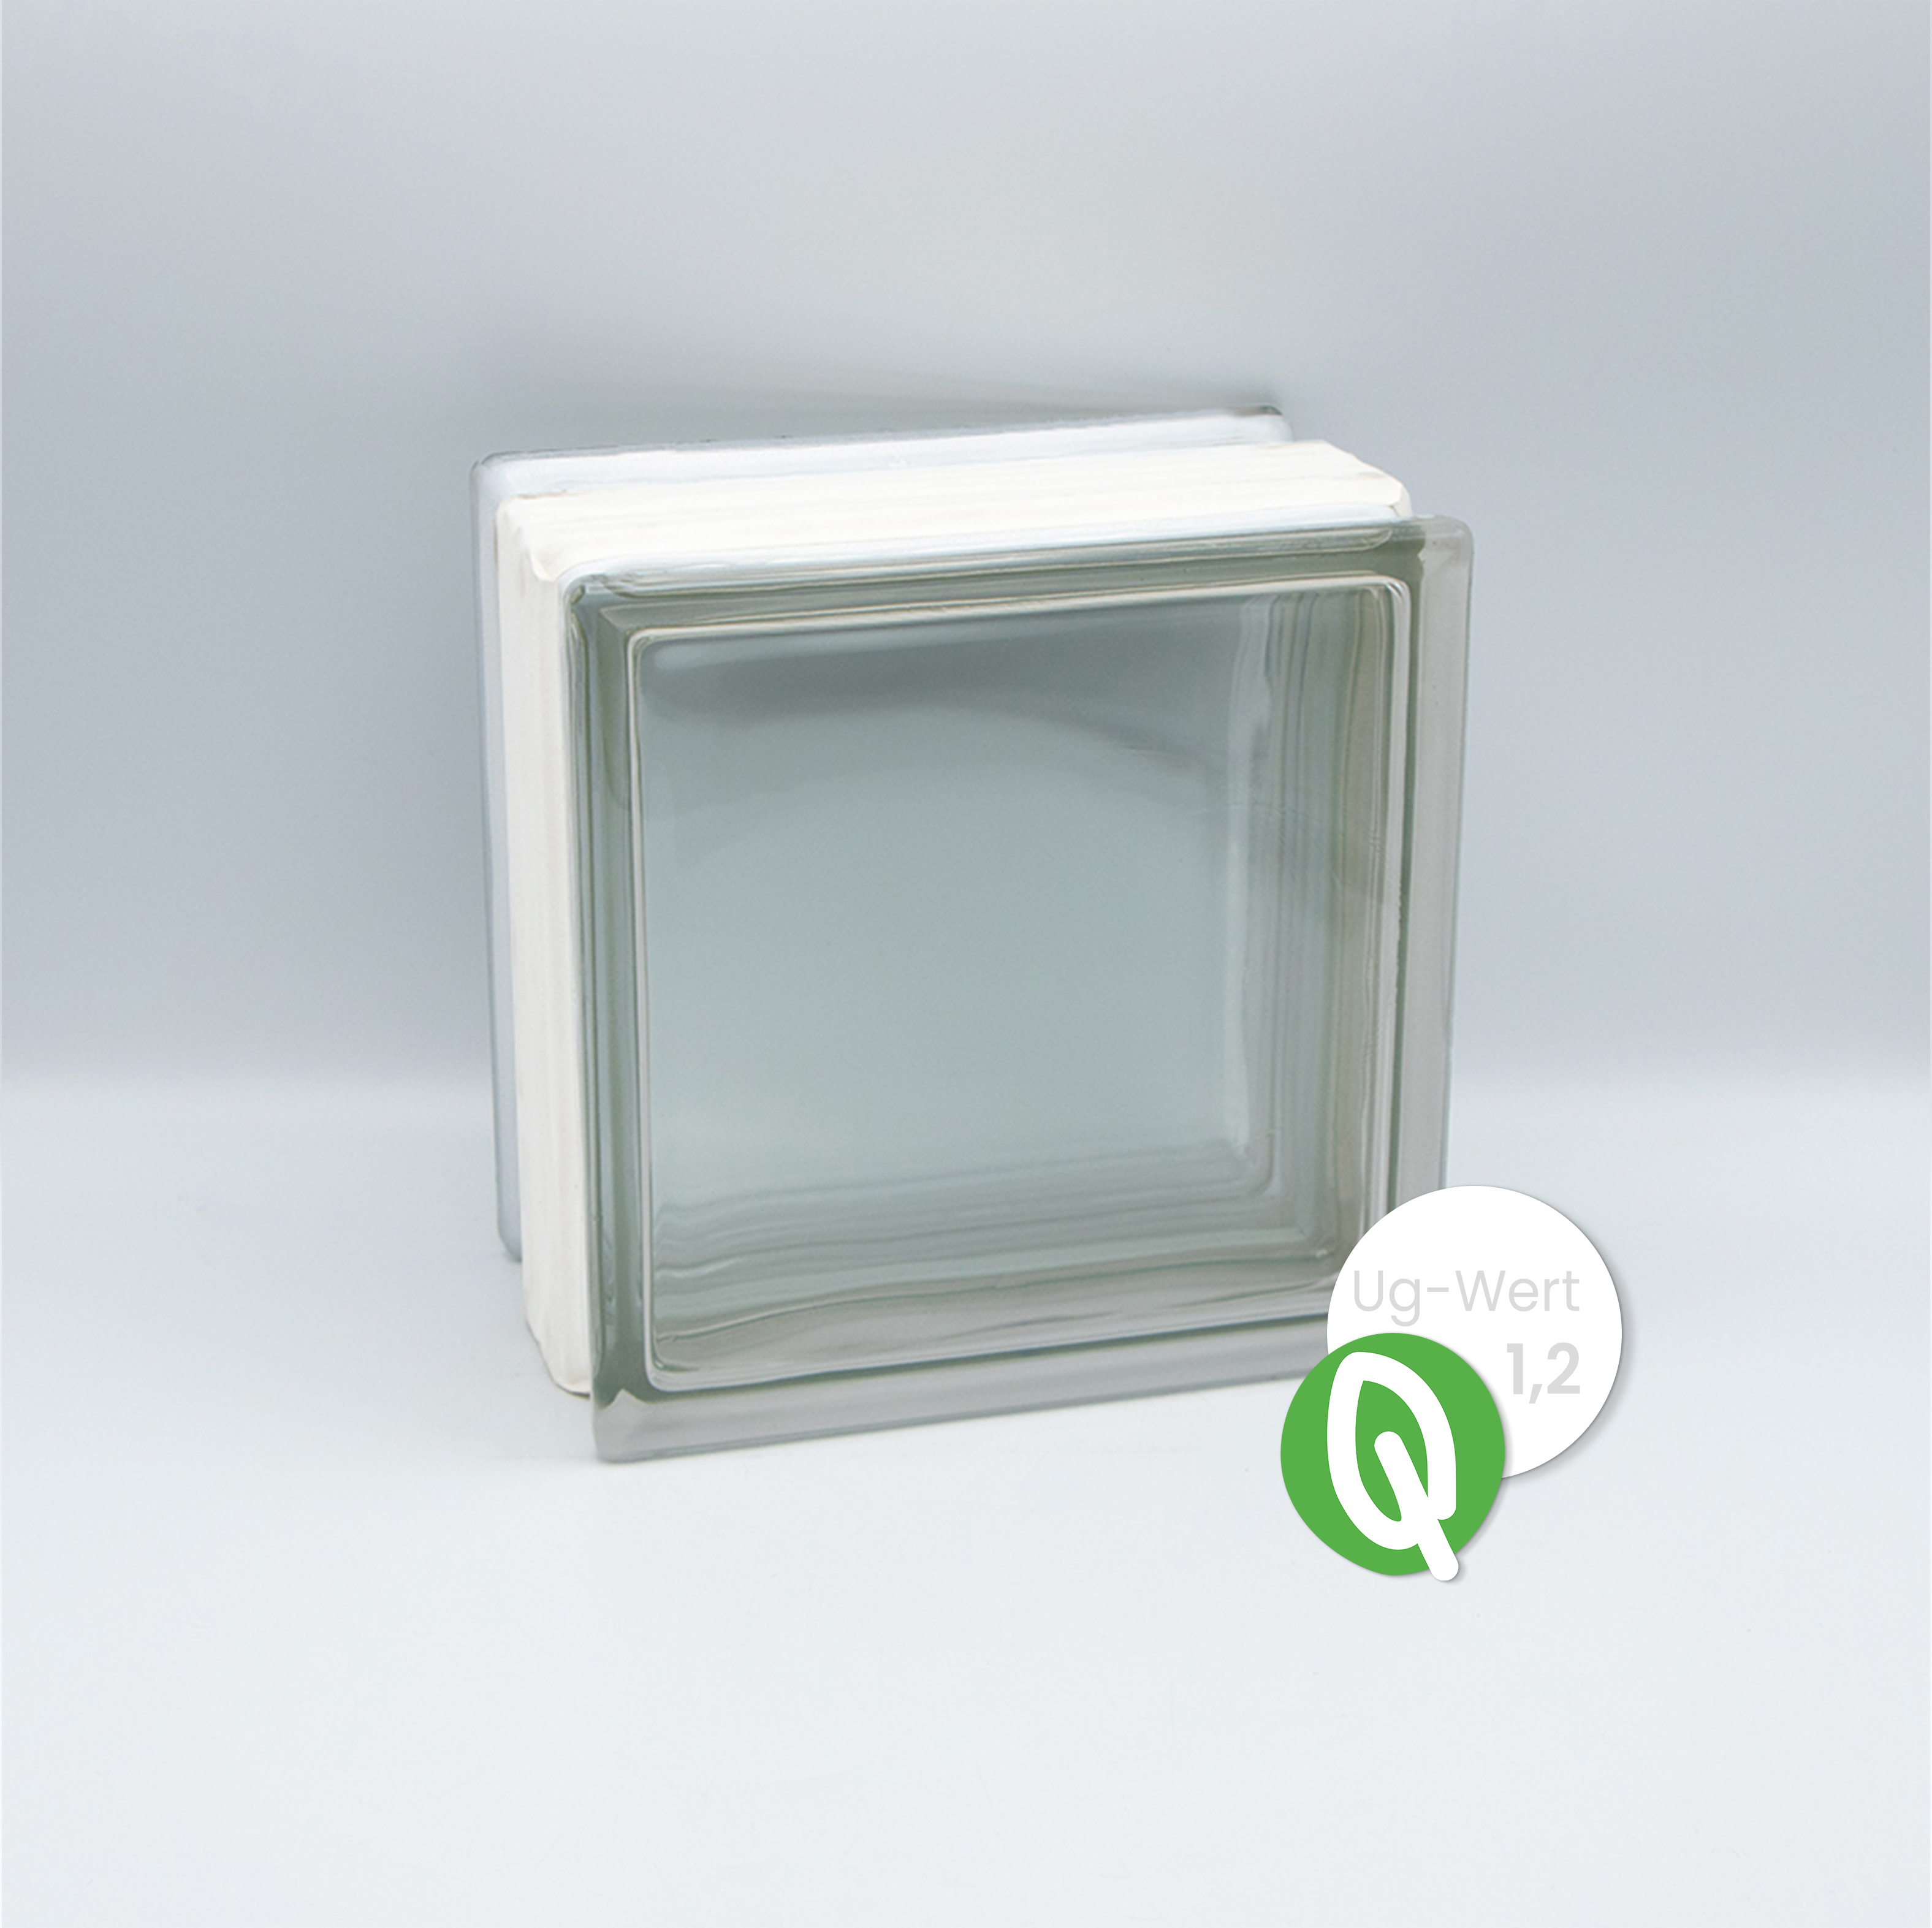 THERMO BLOCK Glasbaustein Vollsicht klar, 19 x 19 x 12 cm, Wärmedämmung: Ug 1,2